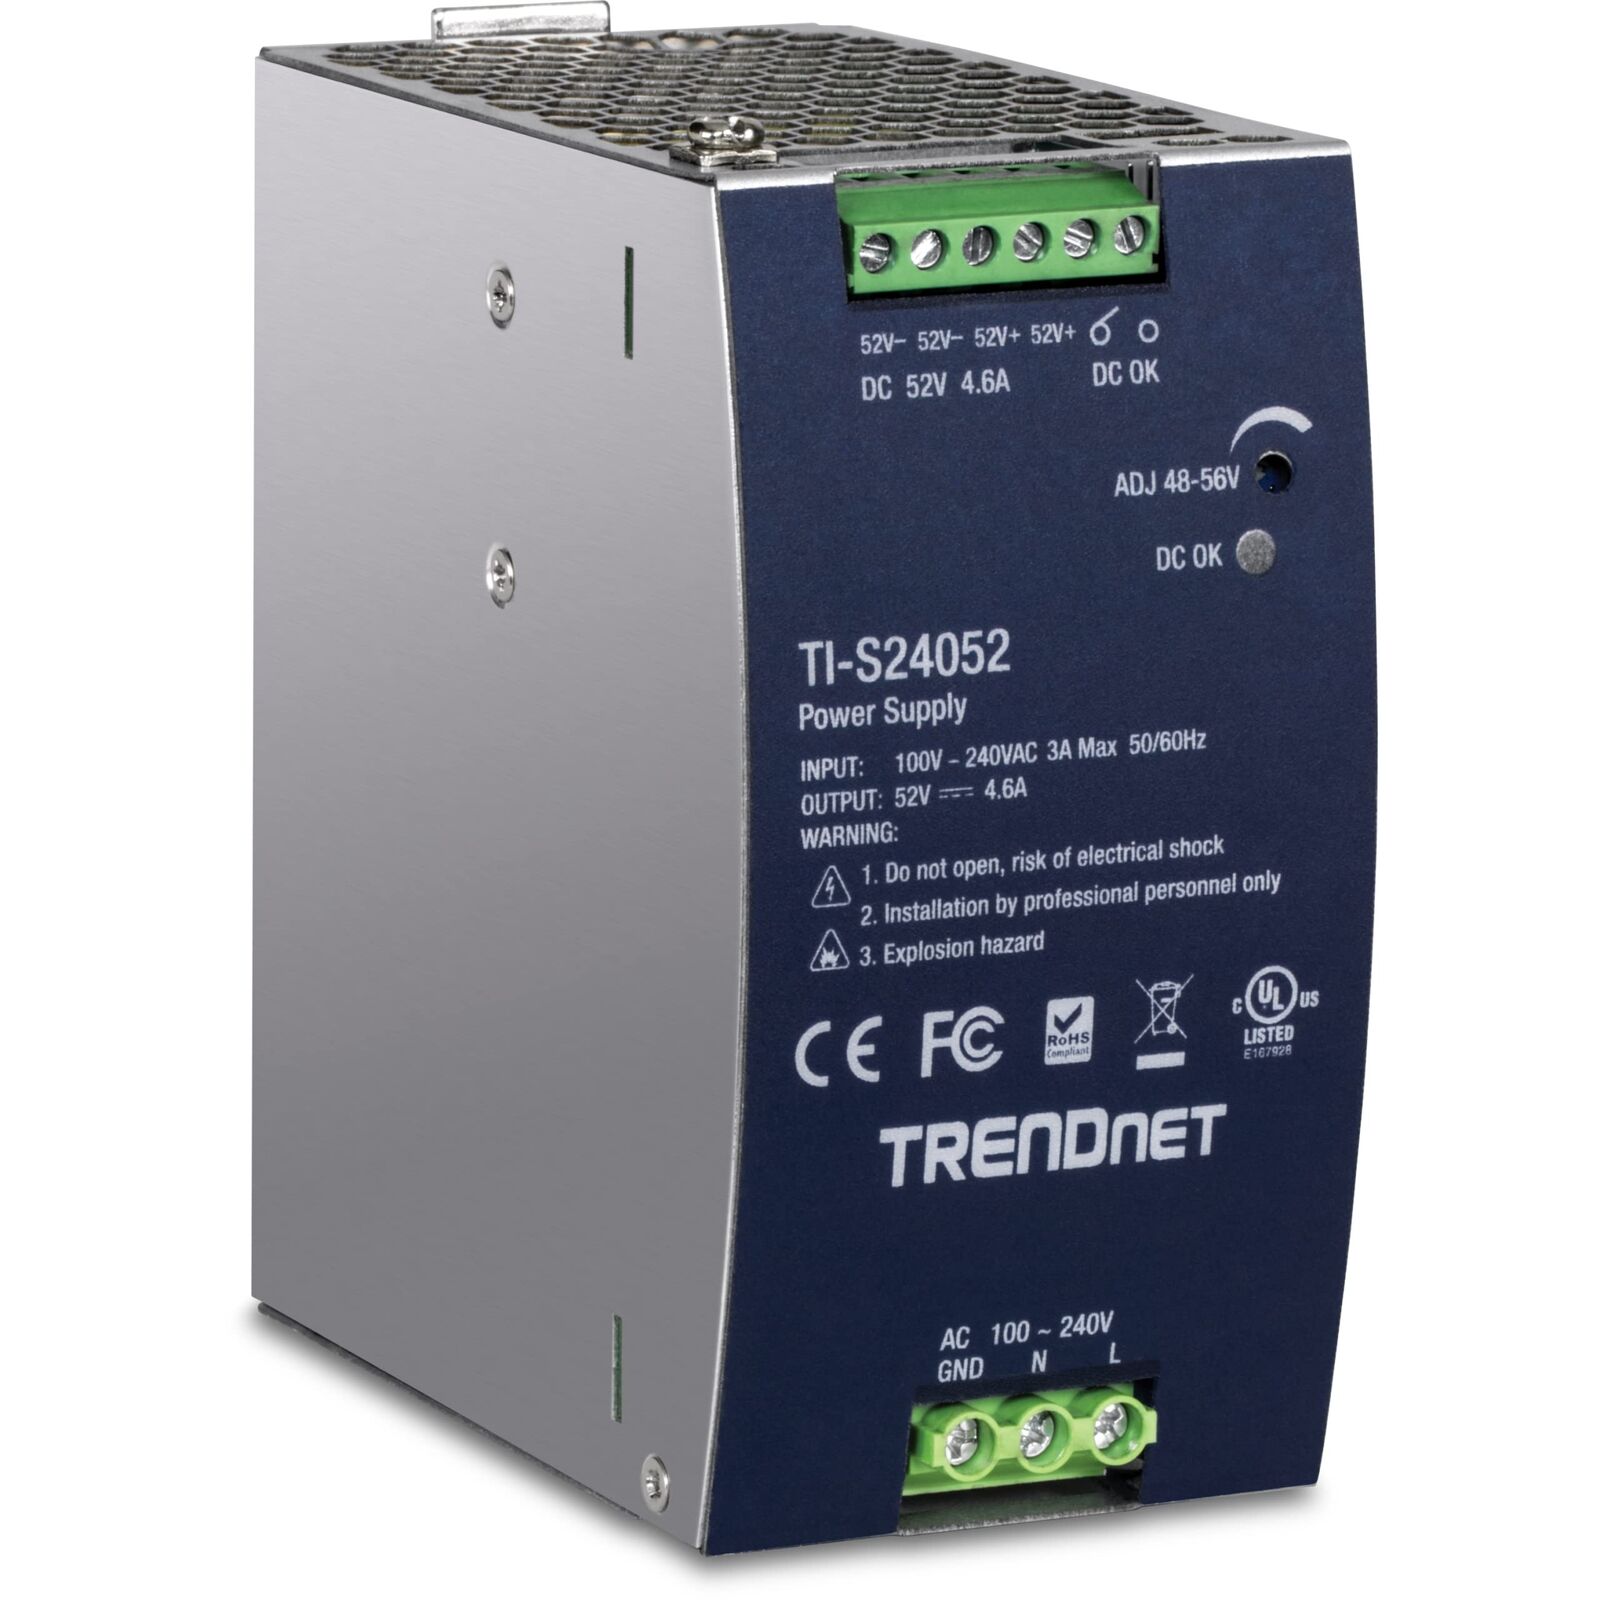 TRENDnet 240W, 52V DC, 4.61A AC to DC DIN-Rail Power Supply, TI-S24052, Industri